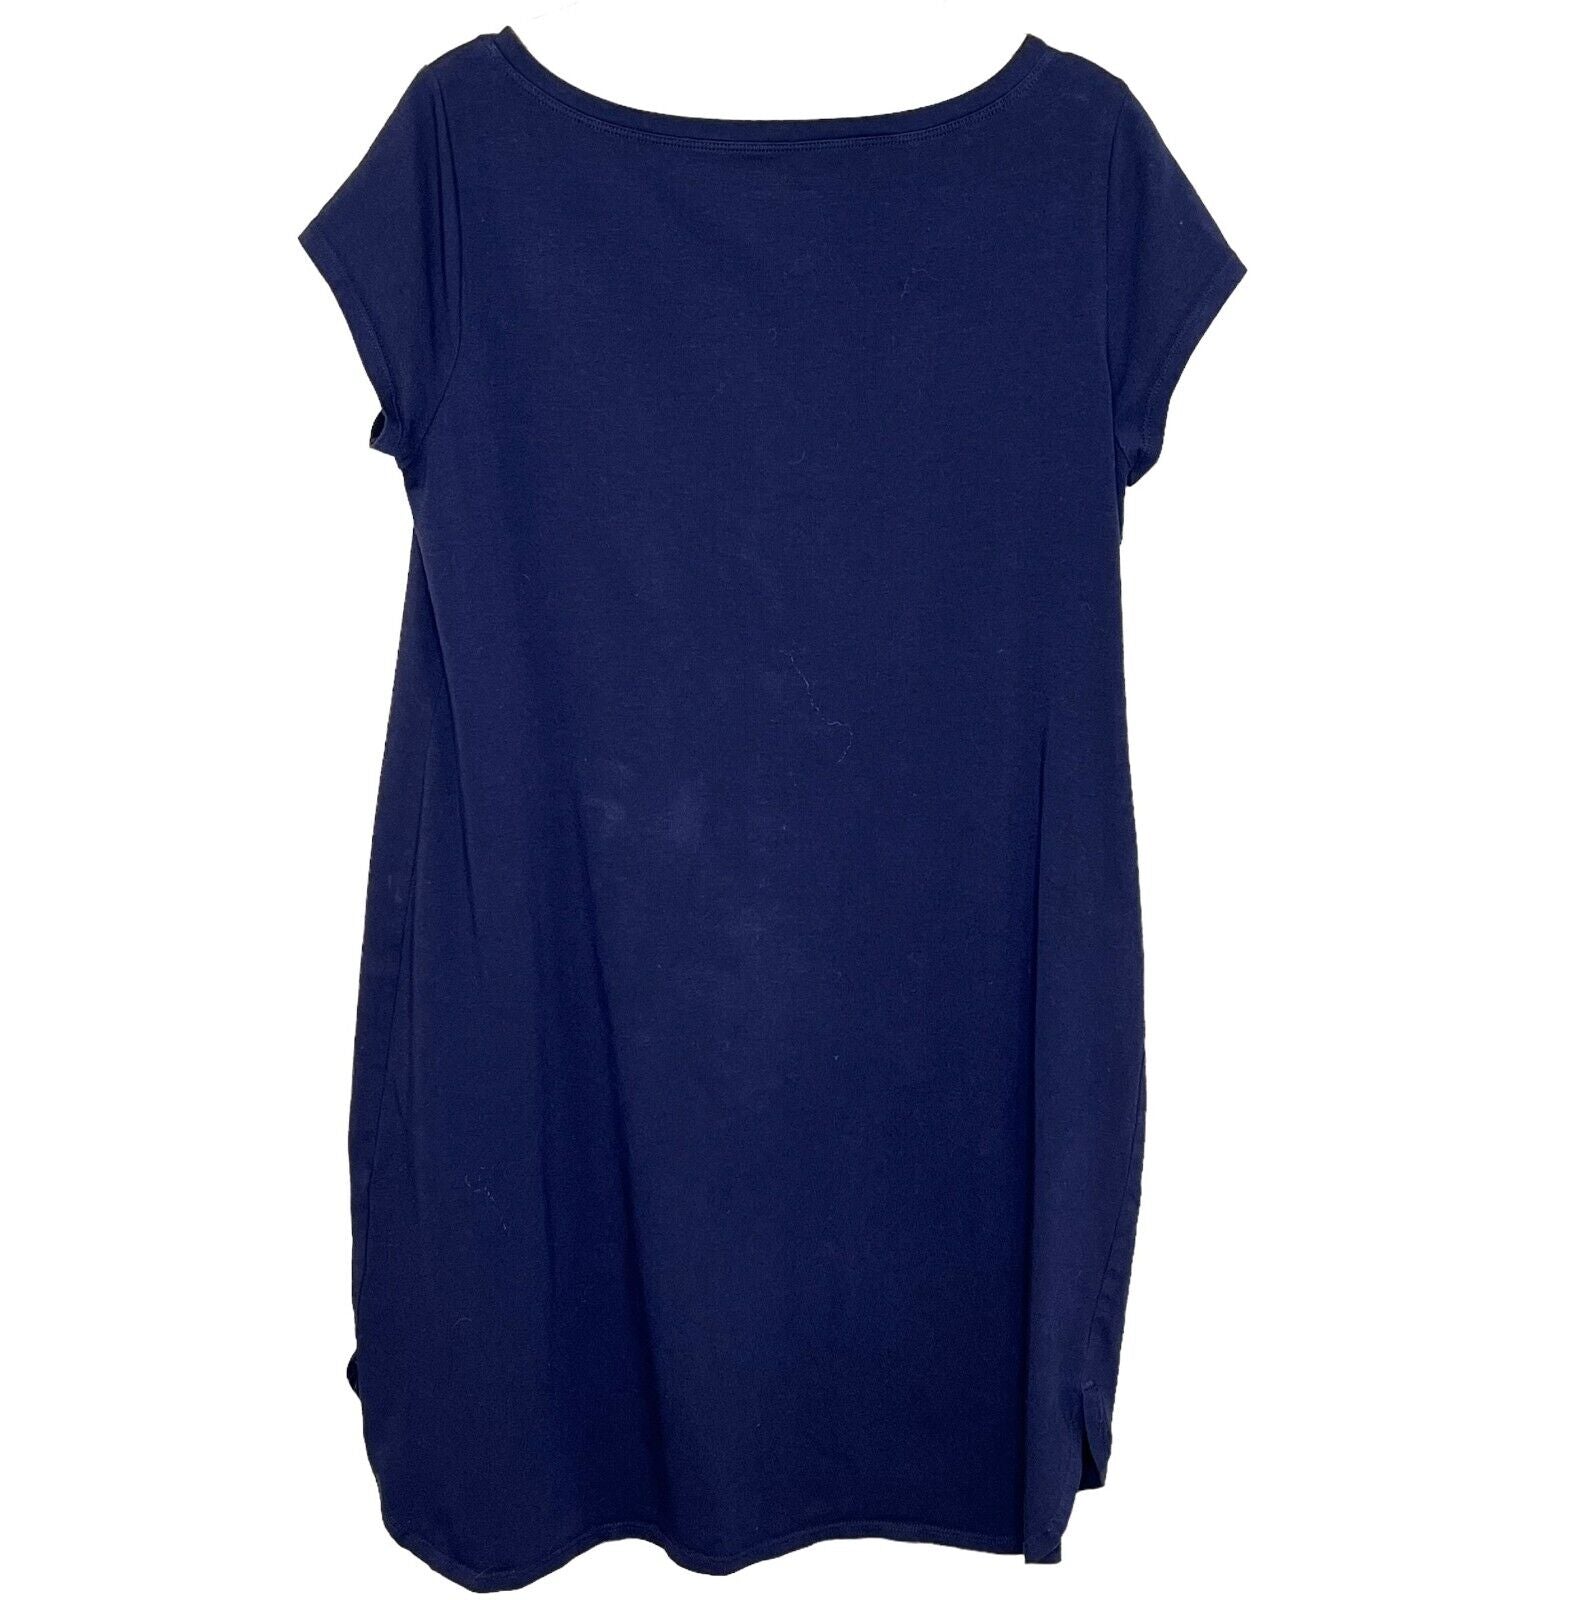 Eileen Fisher Organic Cotton / Spandex Navy Blue Tee Shirt Dress Small